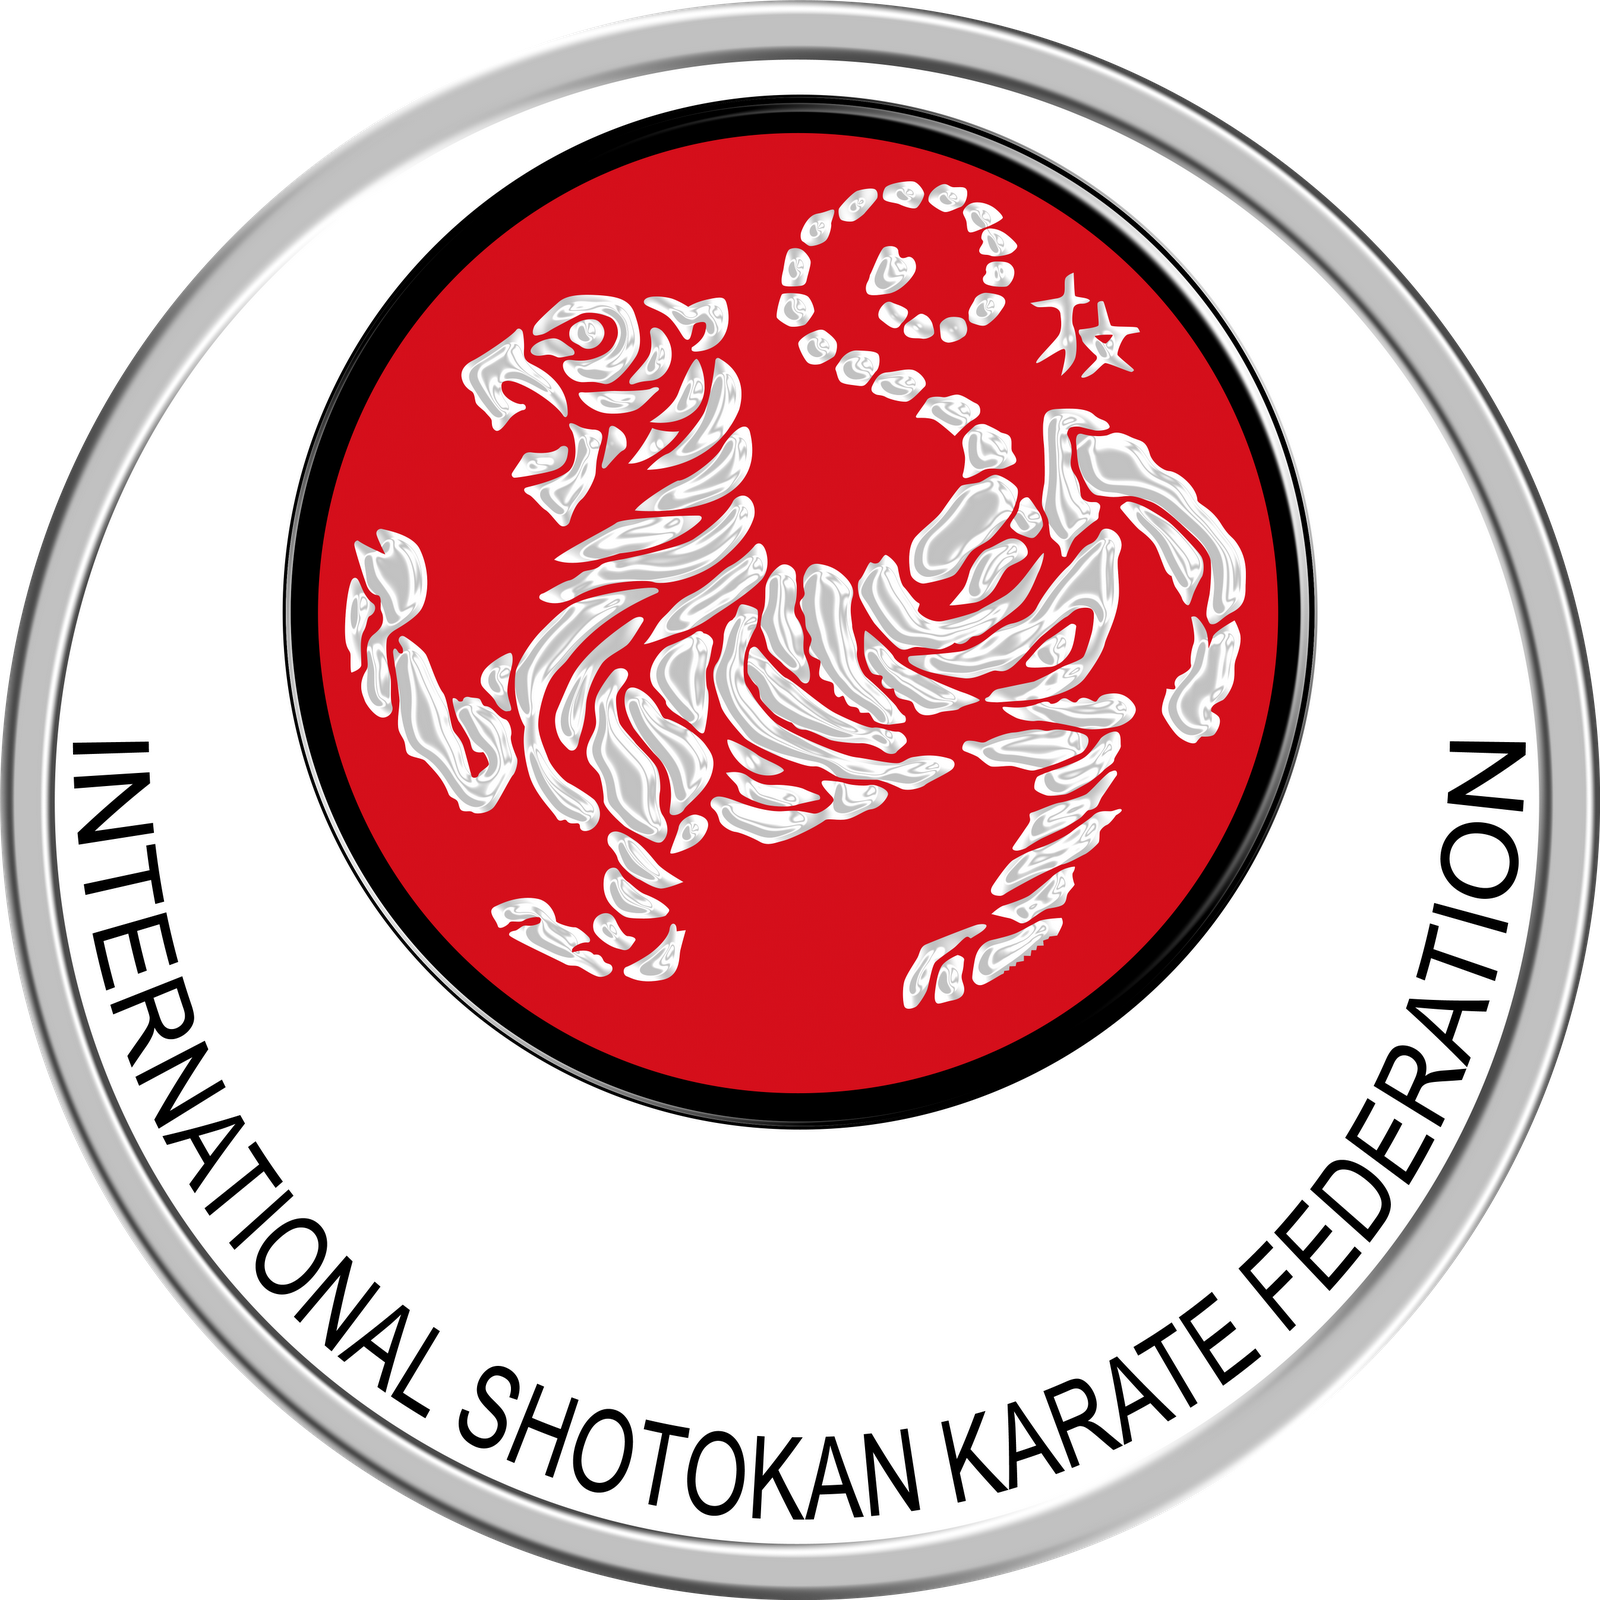 Aprender acerca 41+ imagen international shotokan karate club